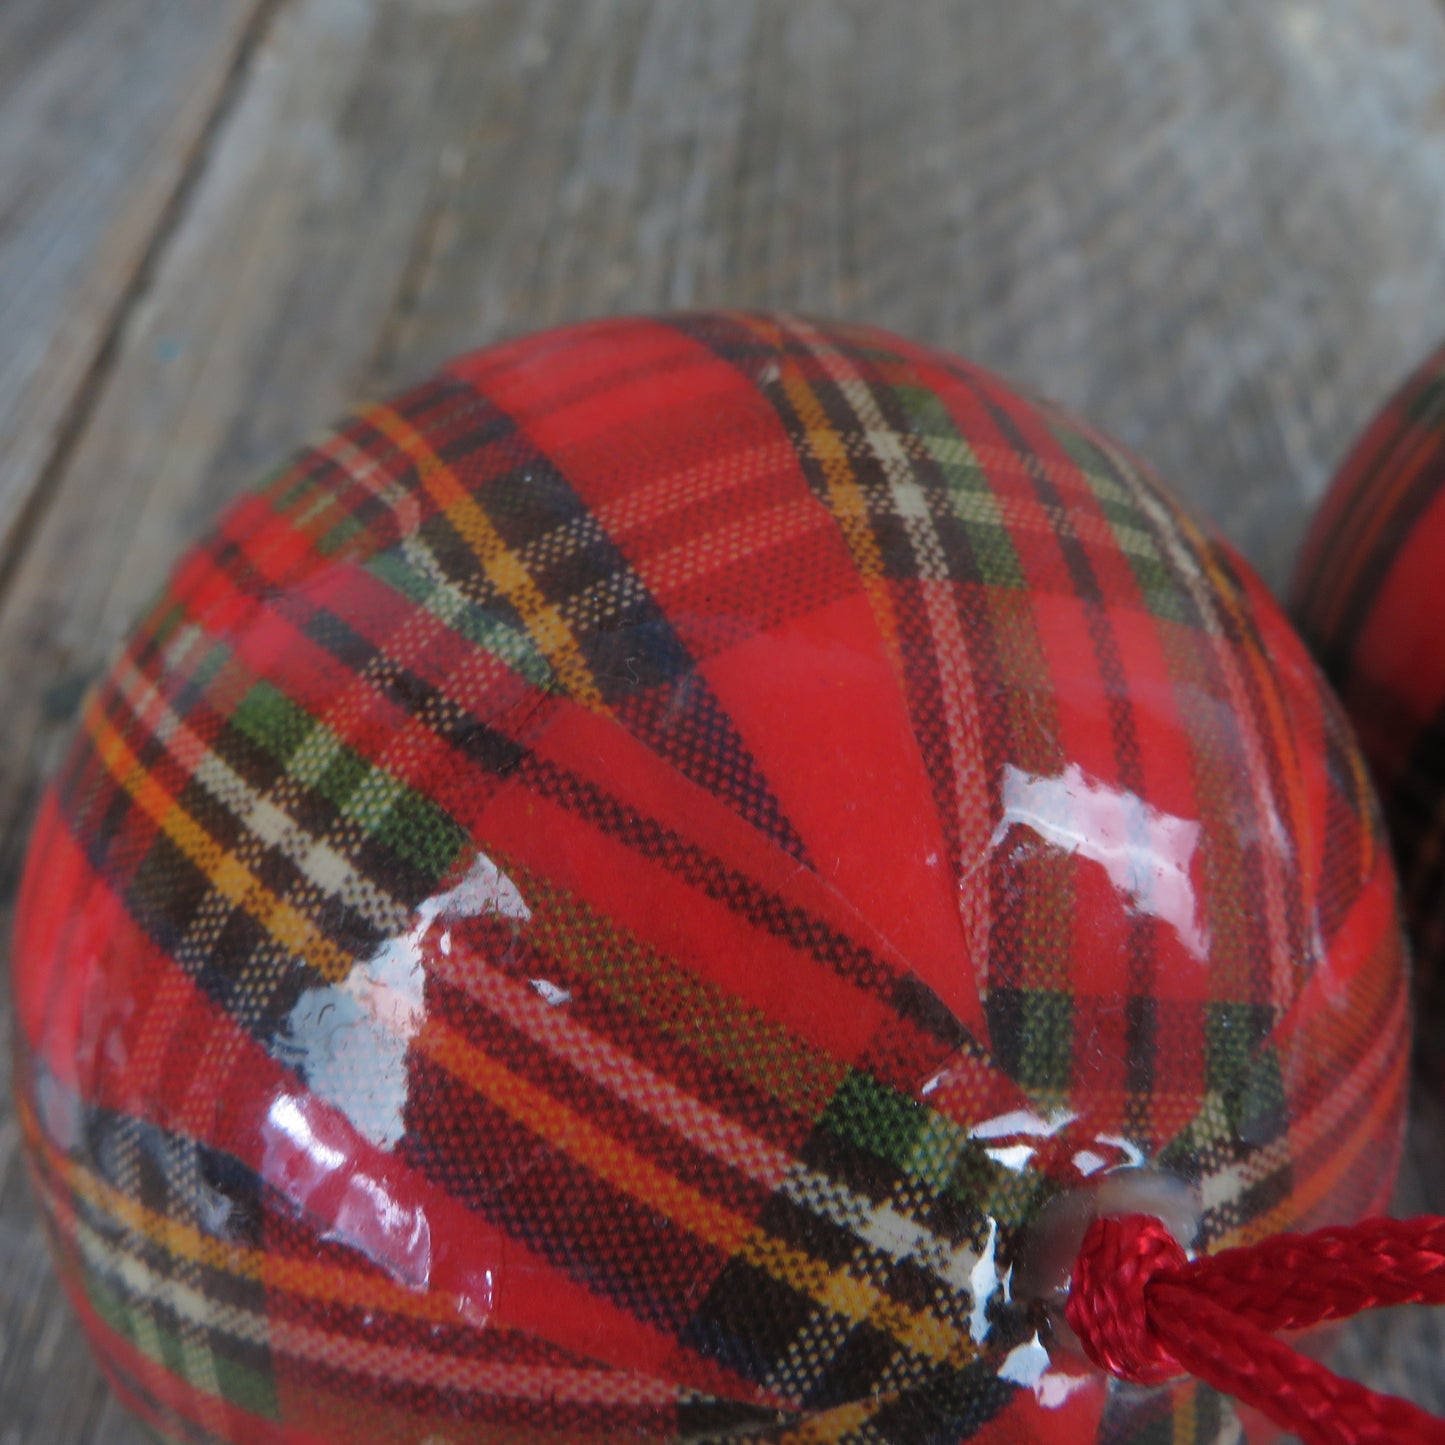 Vintage Red Tartan Plaid Ball Christmas Ornament Decoupage Royal Stewart Fabric or Paper Covered Mache - At Grandma's Table